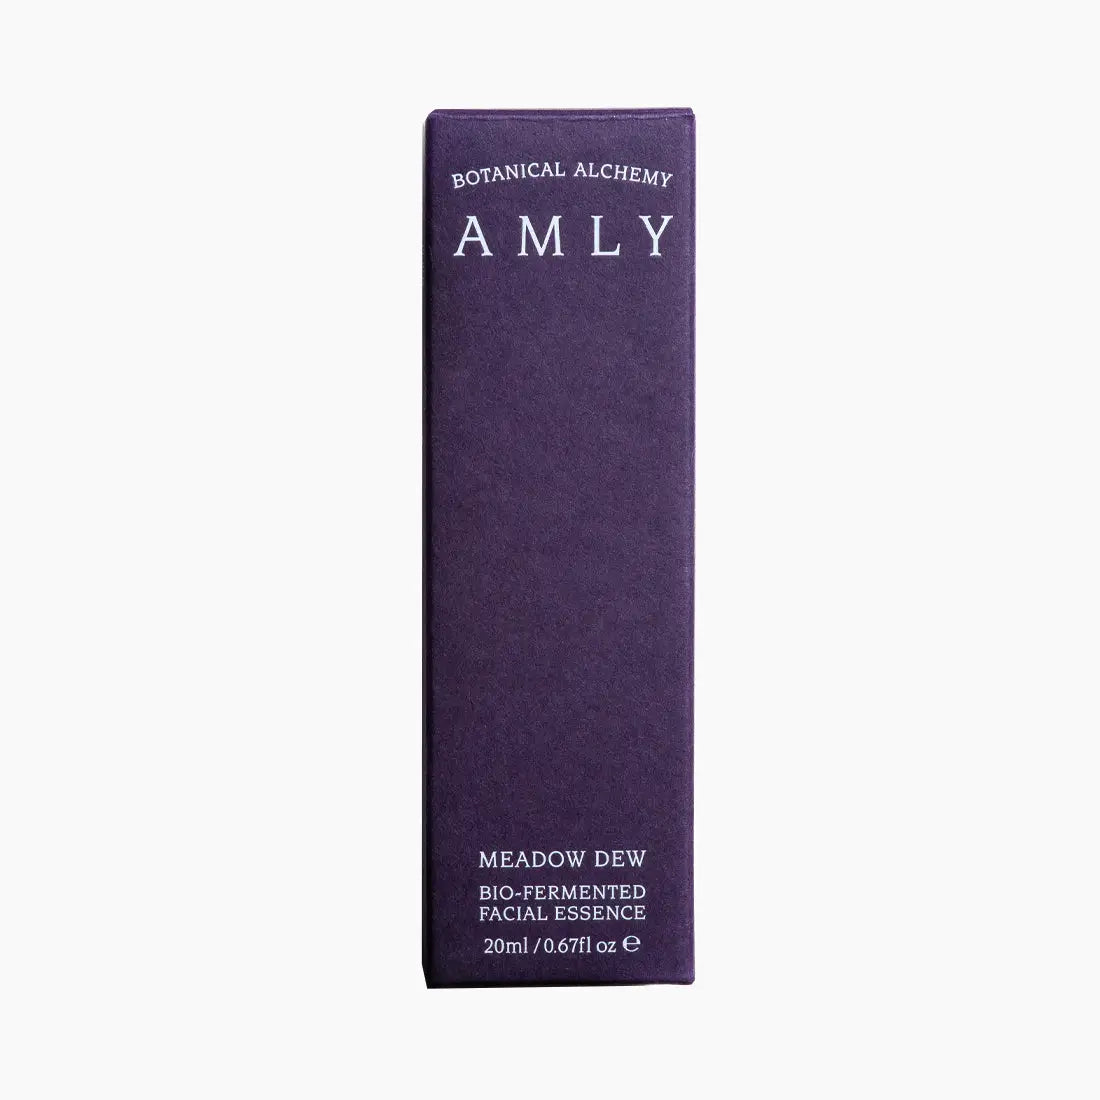 Amly Meadow Dew Facial Essence 20ml - Free Shipping 